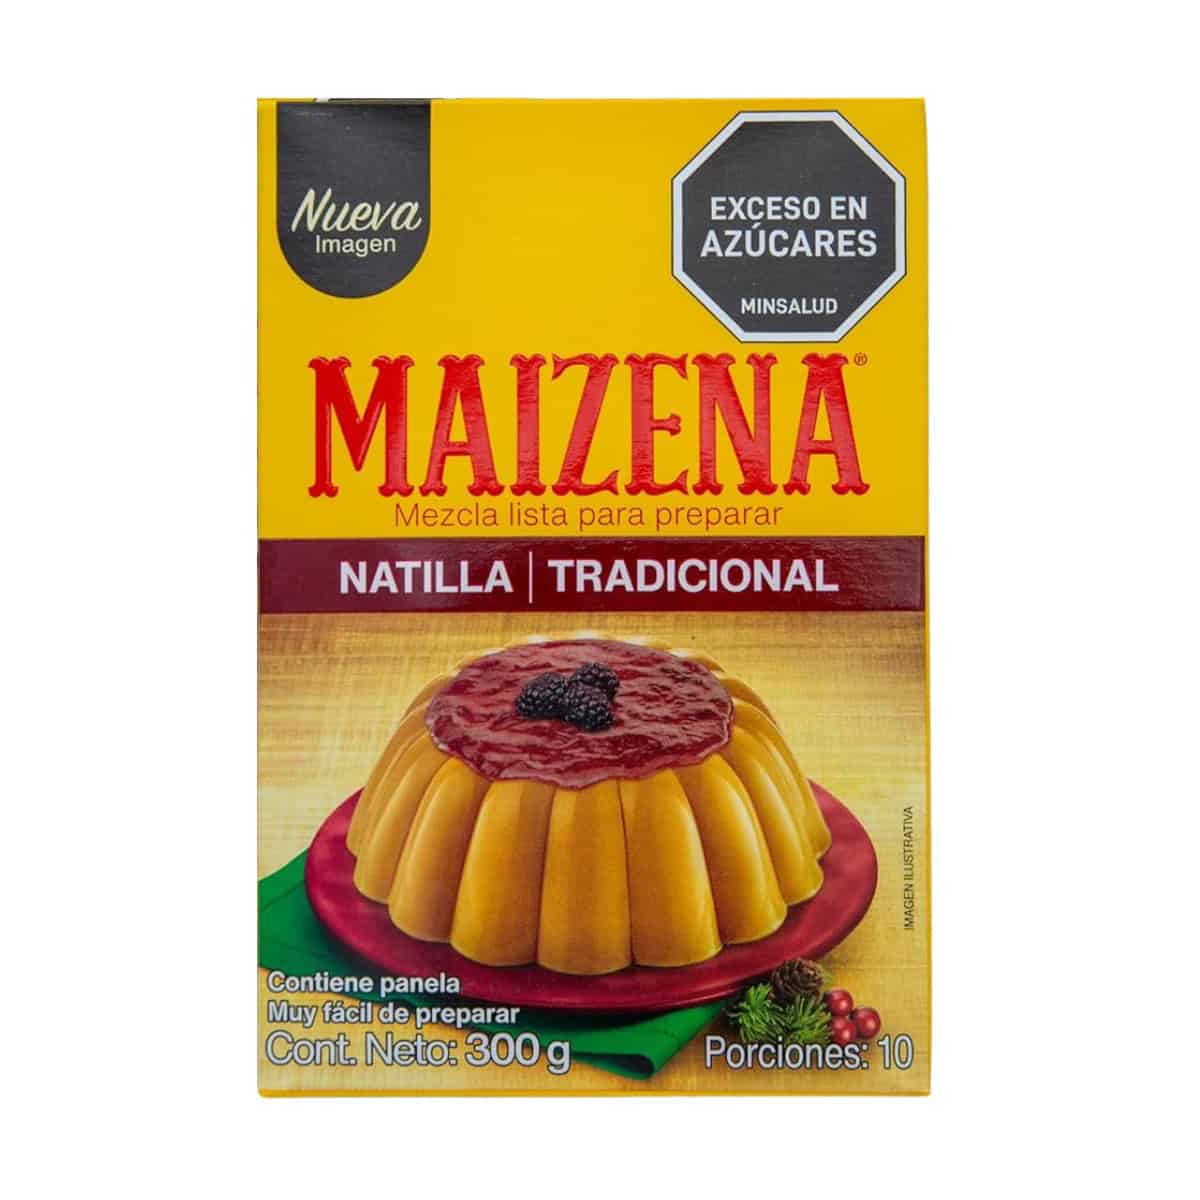 Buy Maizena Natilla De Arequipe (Mezcla Lista Para Preparar) - 300 gm